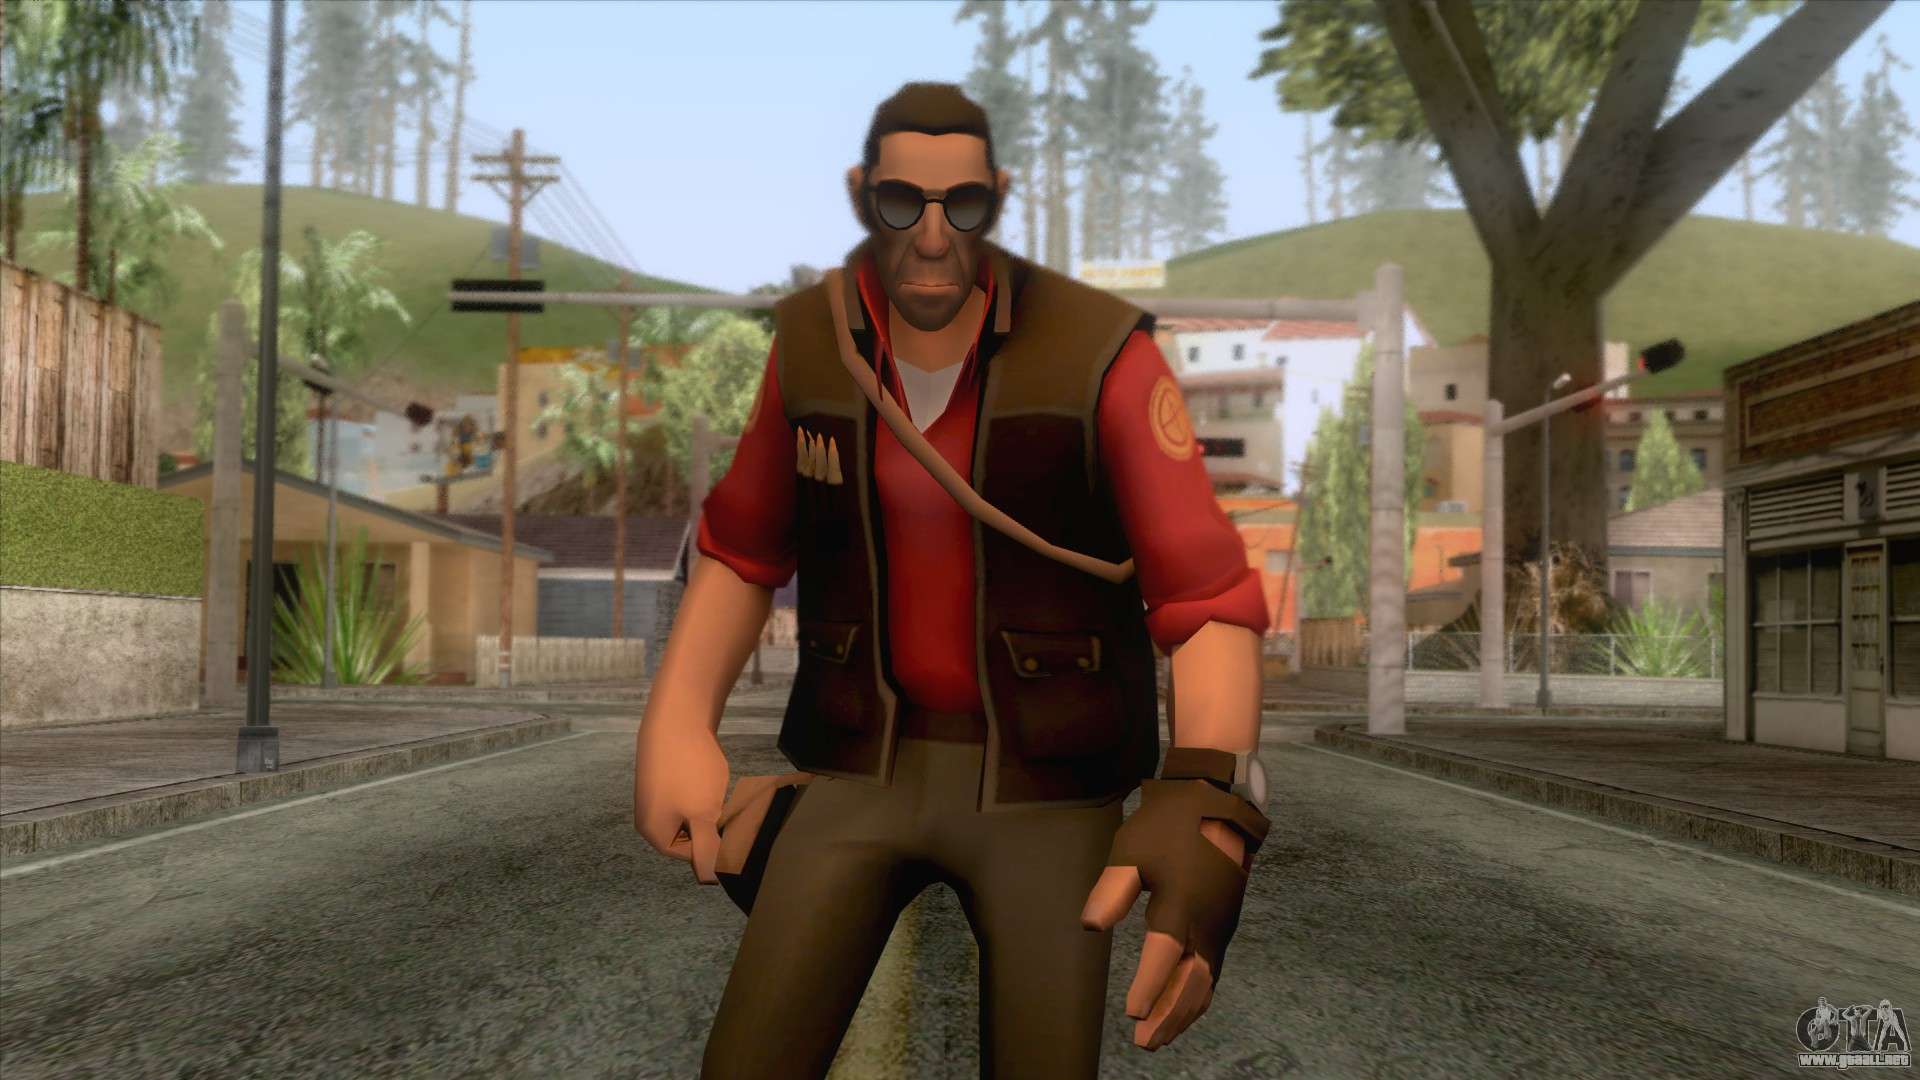 Team Fortress 2 - Sniper Skin v2 for GTA San Andreas